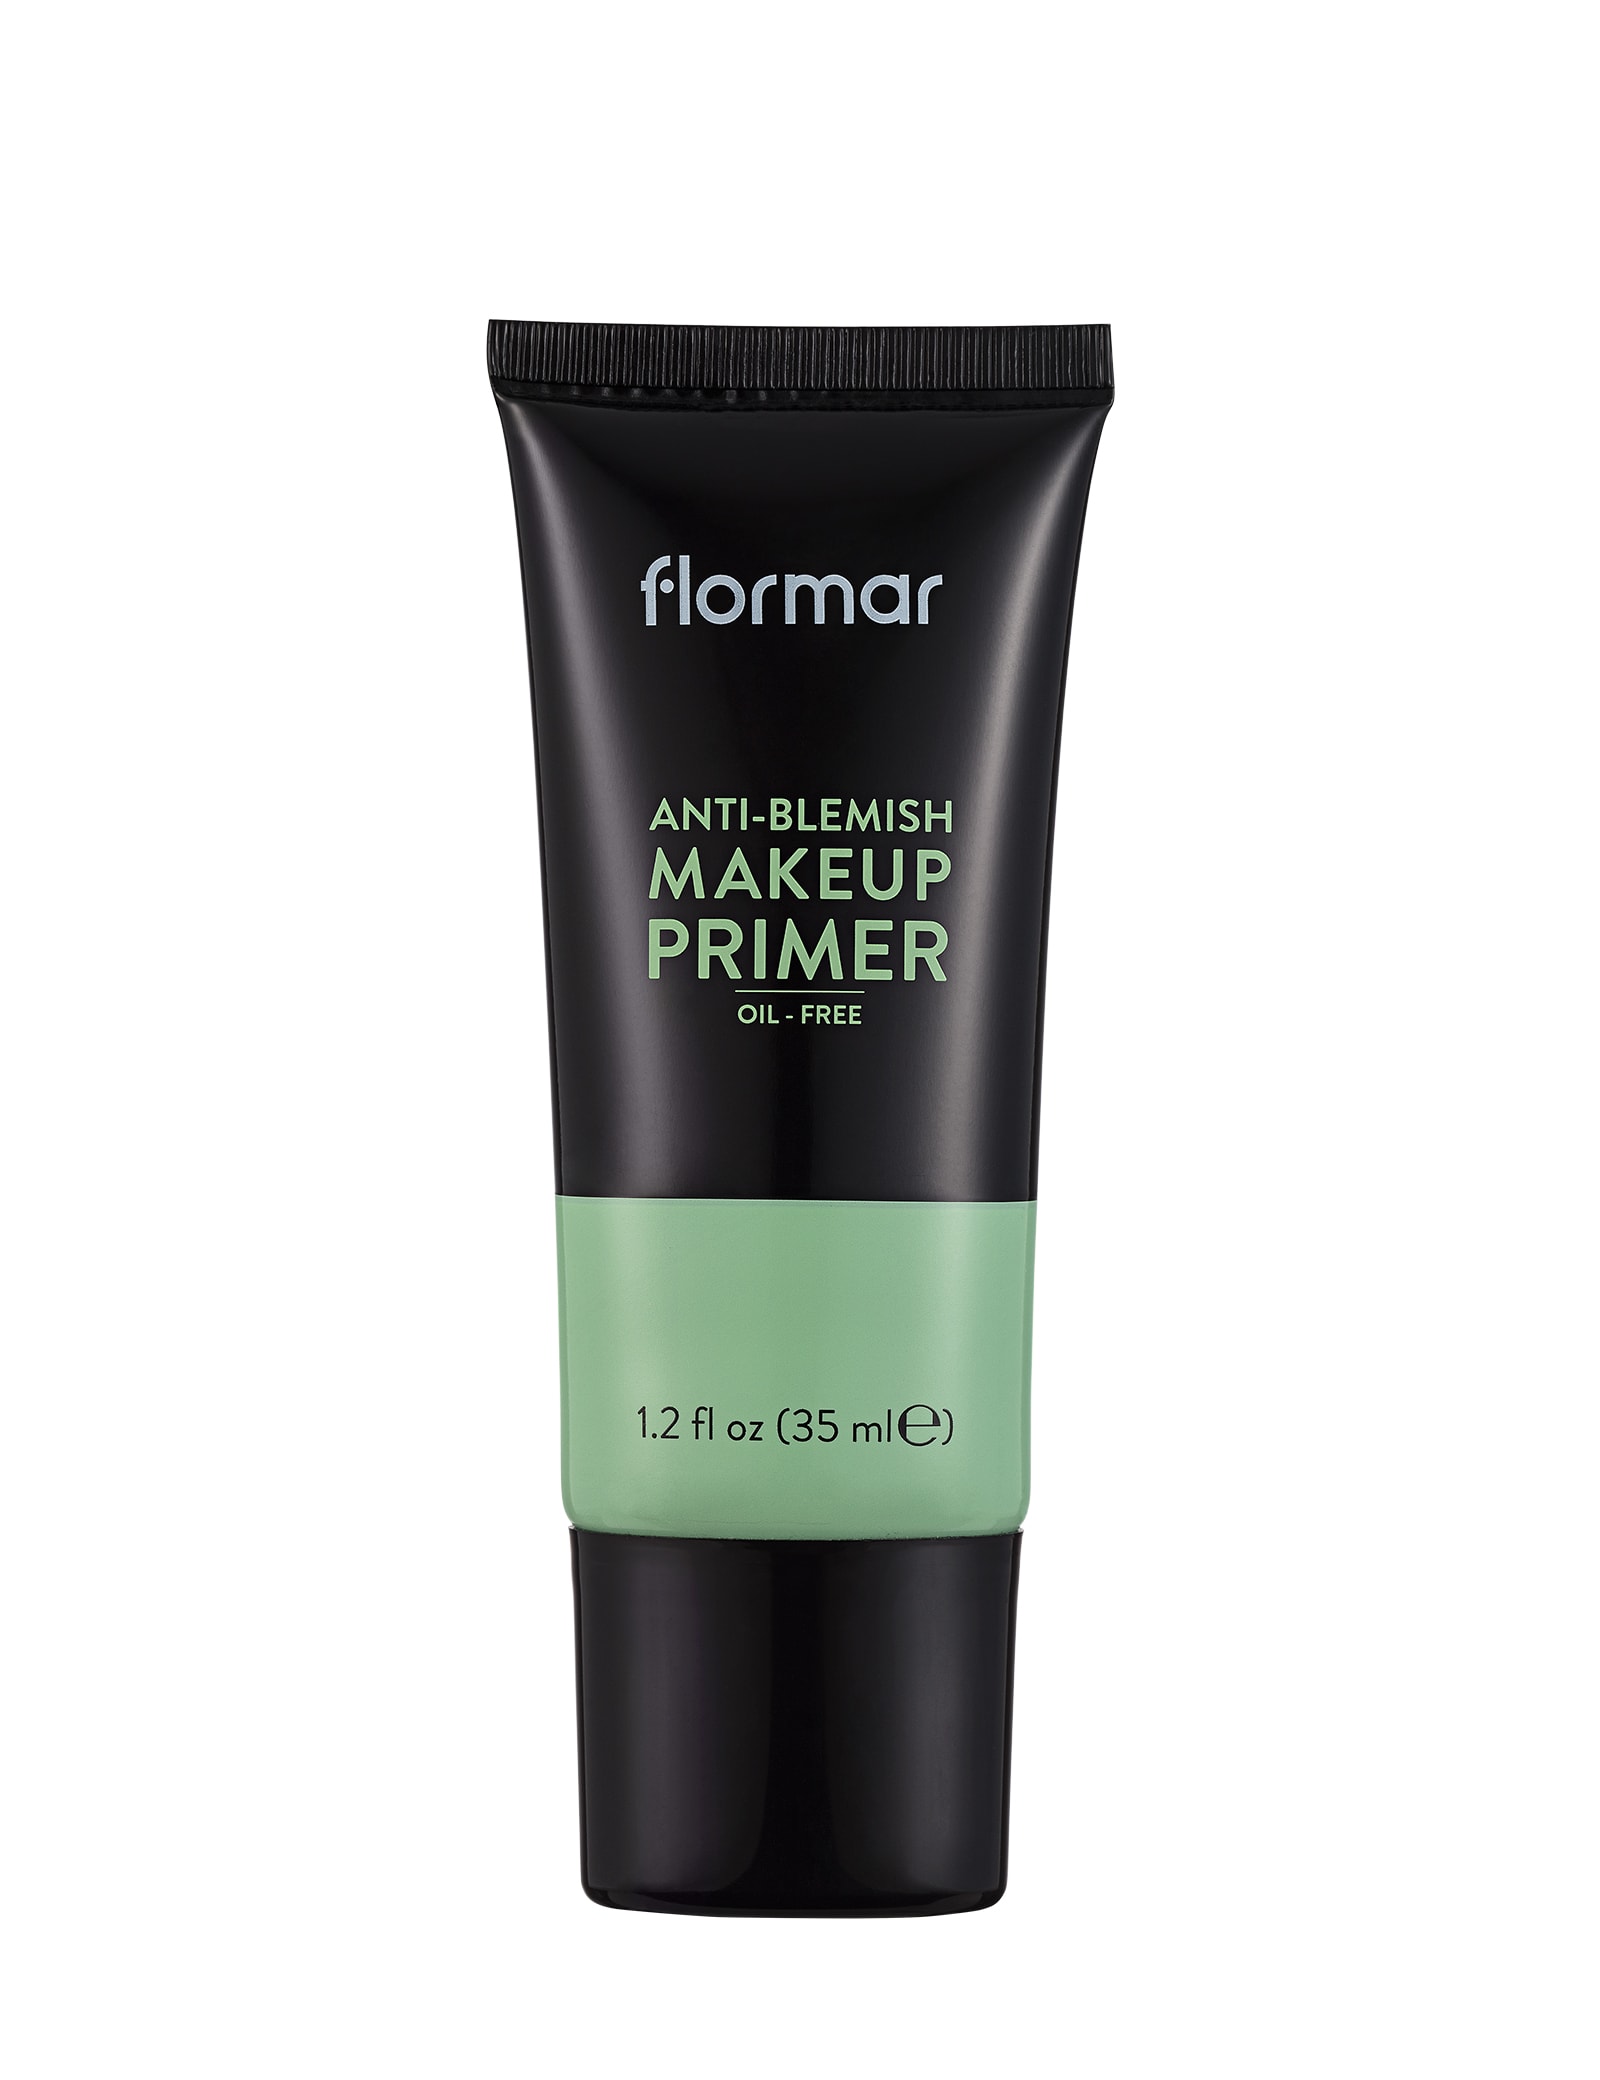 Flormar Anti-Blemish Makeup Primer